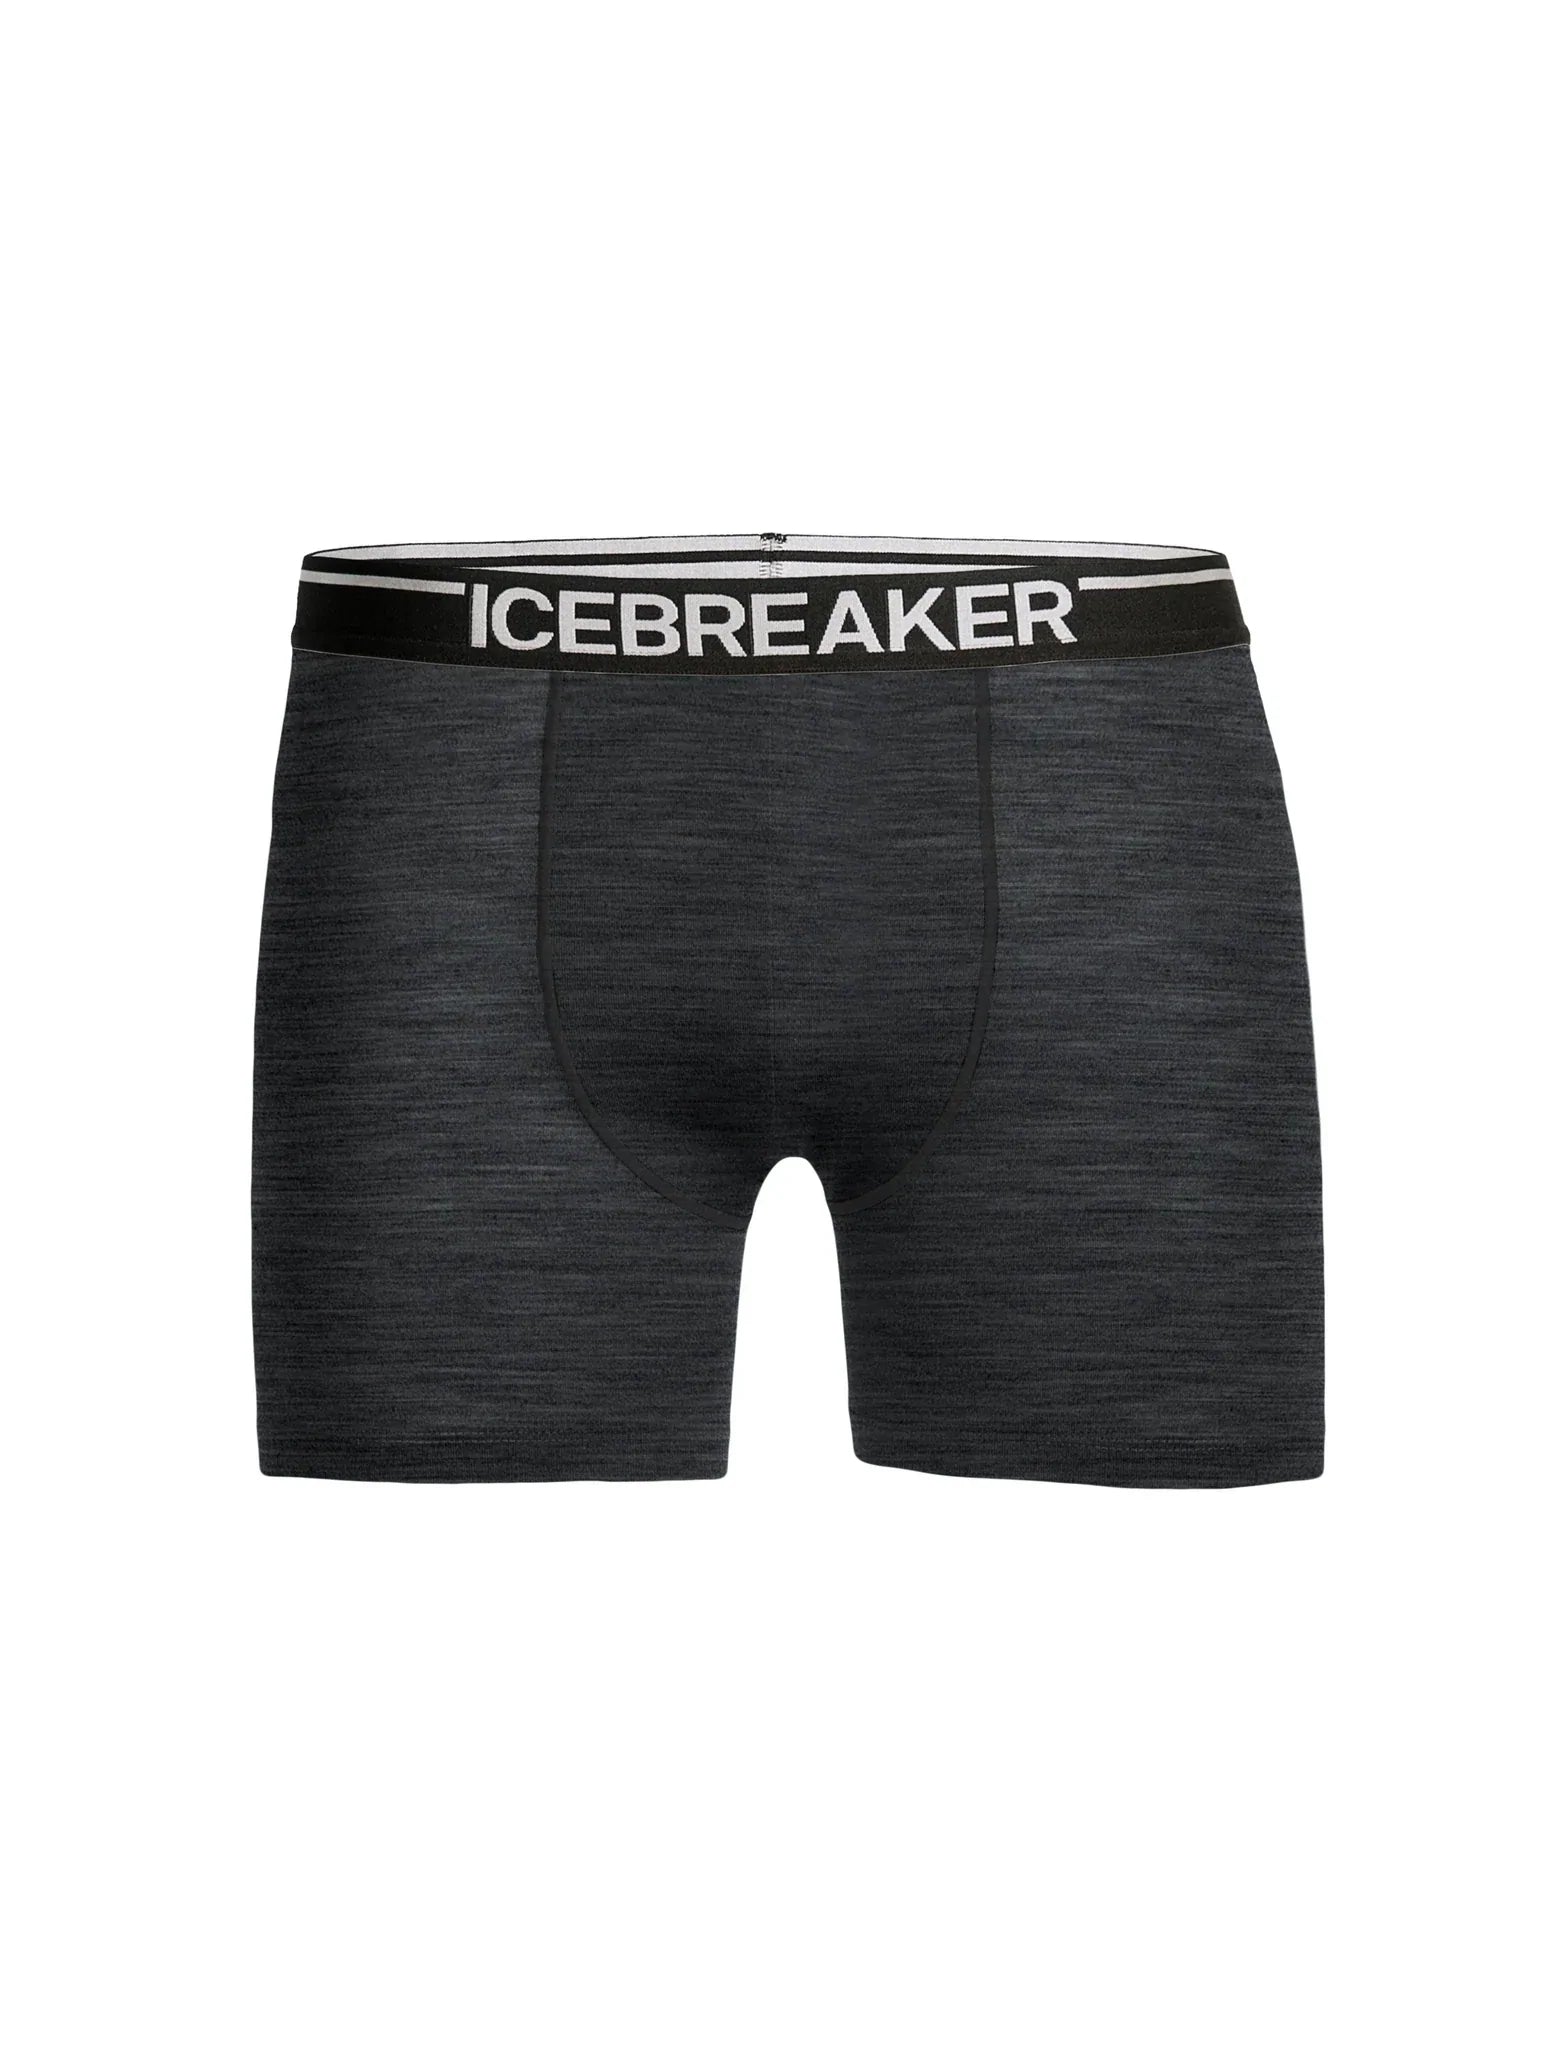  Icebreaker Merino Mens Anatomica Cool-Lite™ Underwear - Trunks,  Small, Black : Clothing, Shoes & Jewelry